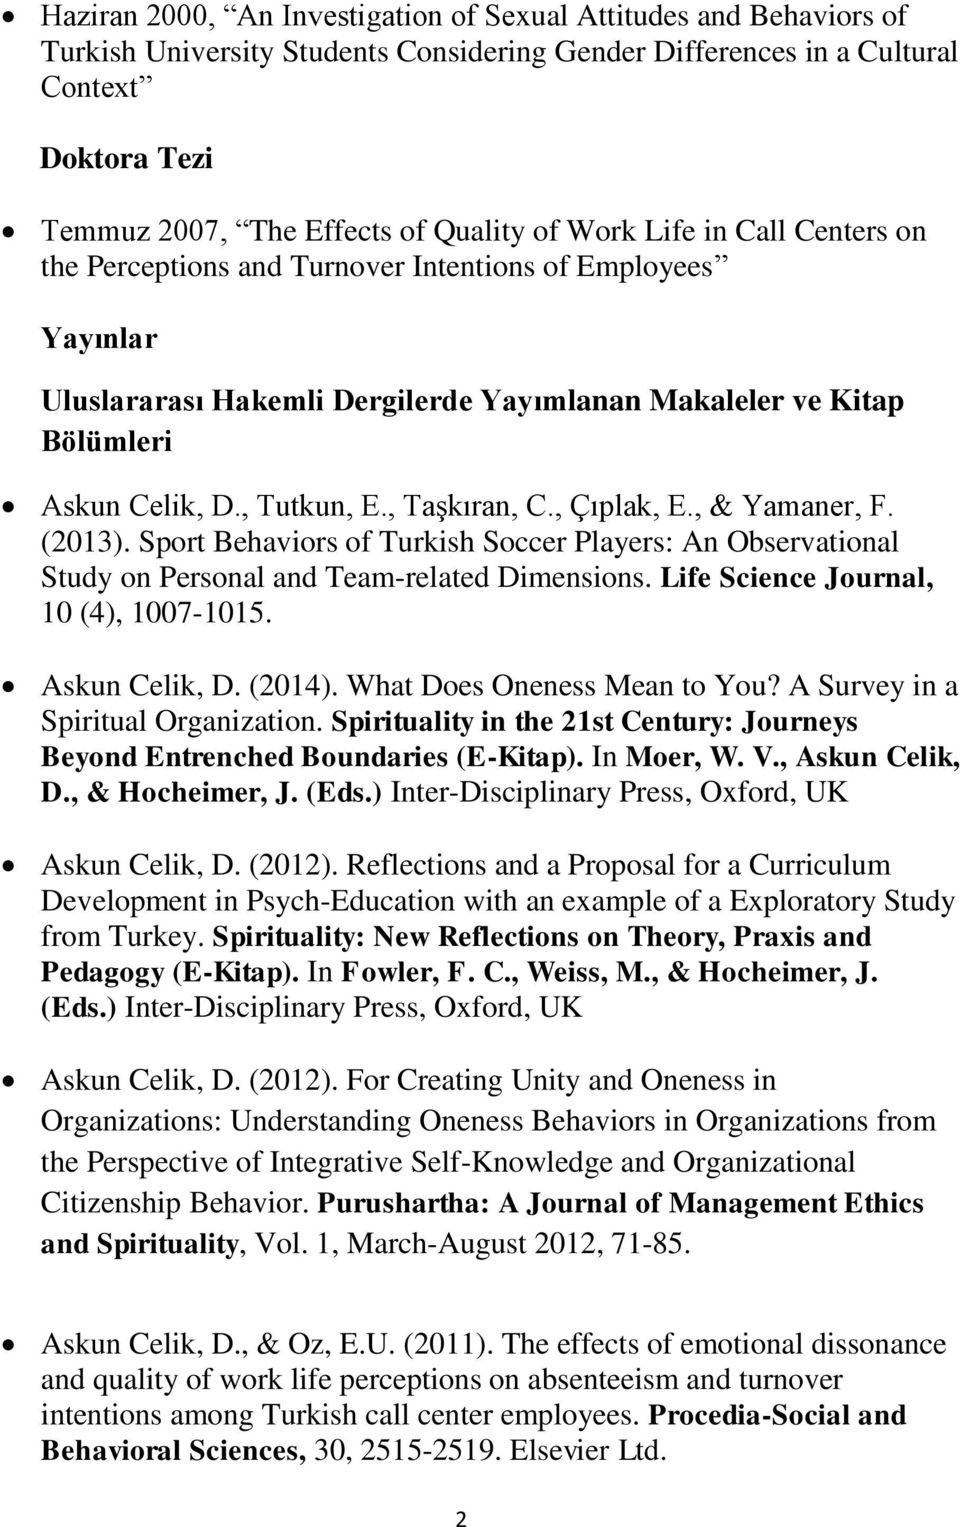 , Taşkıran, C., Çıplak, E., & Yamaner, F. (2013). Sport Behaviors of Turkish Soccer Players: An Observational Study on Personal and Team-related Dimensions. Life Science Journal, 10 (4), 1007-1015.